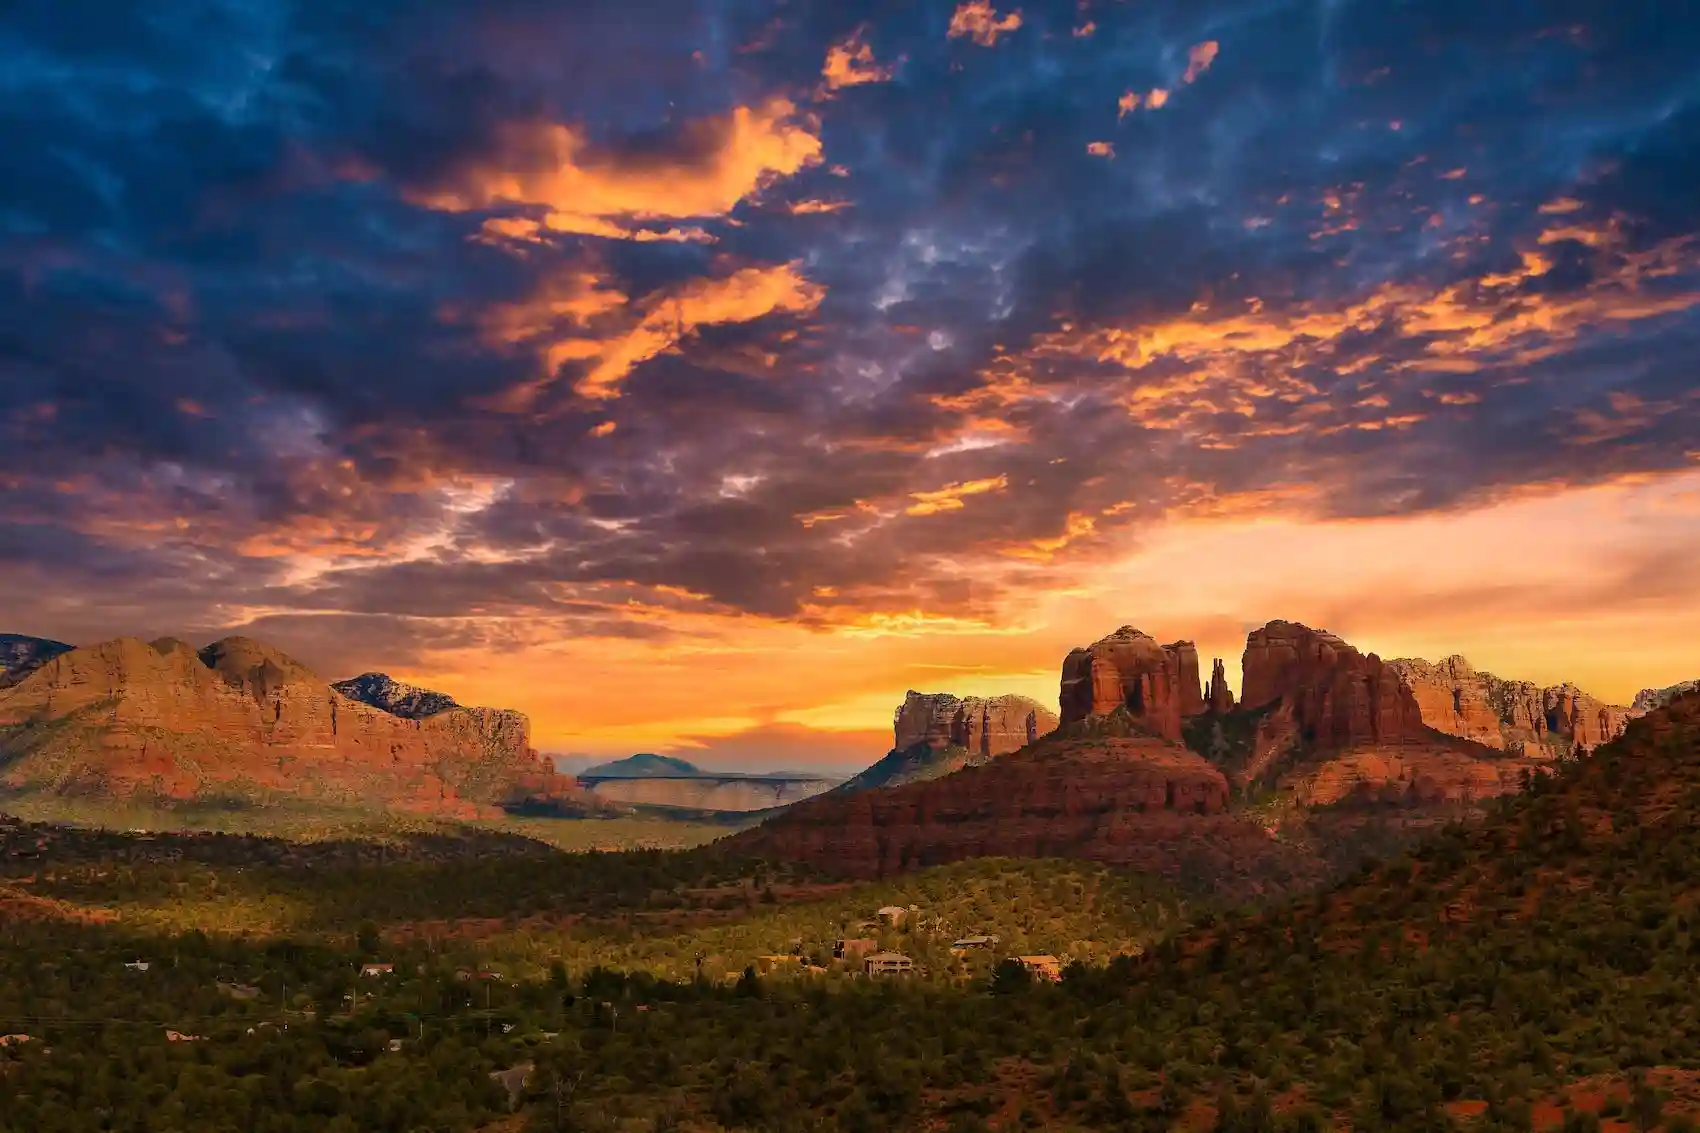 Peaceful Driving Tour Through Magical Sedona Arizona Vortexes Red Rocks and Amazing Views image